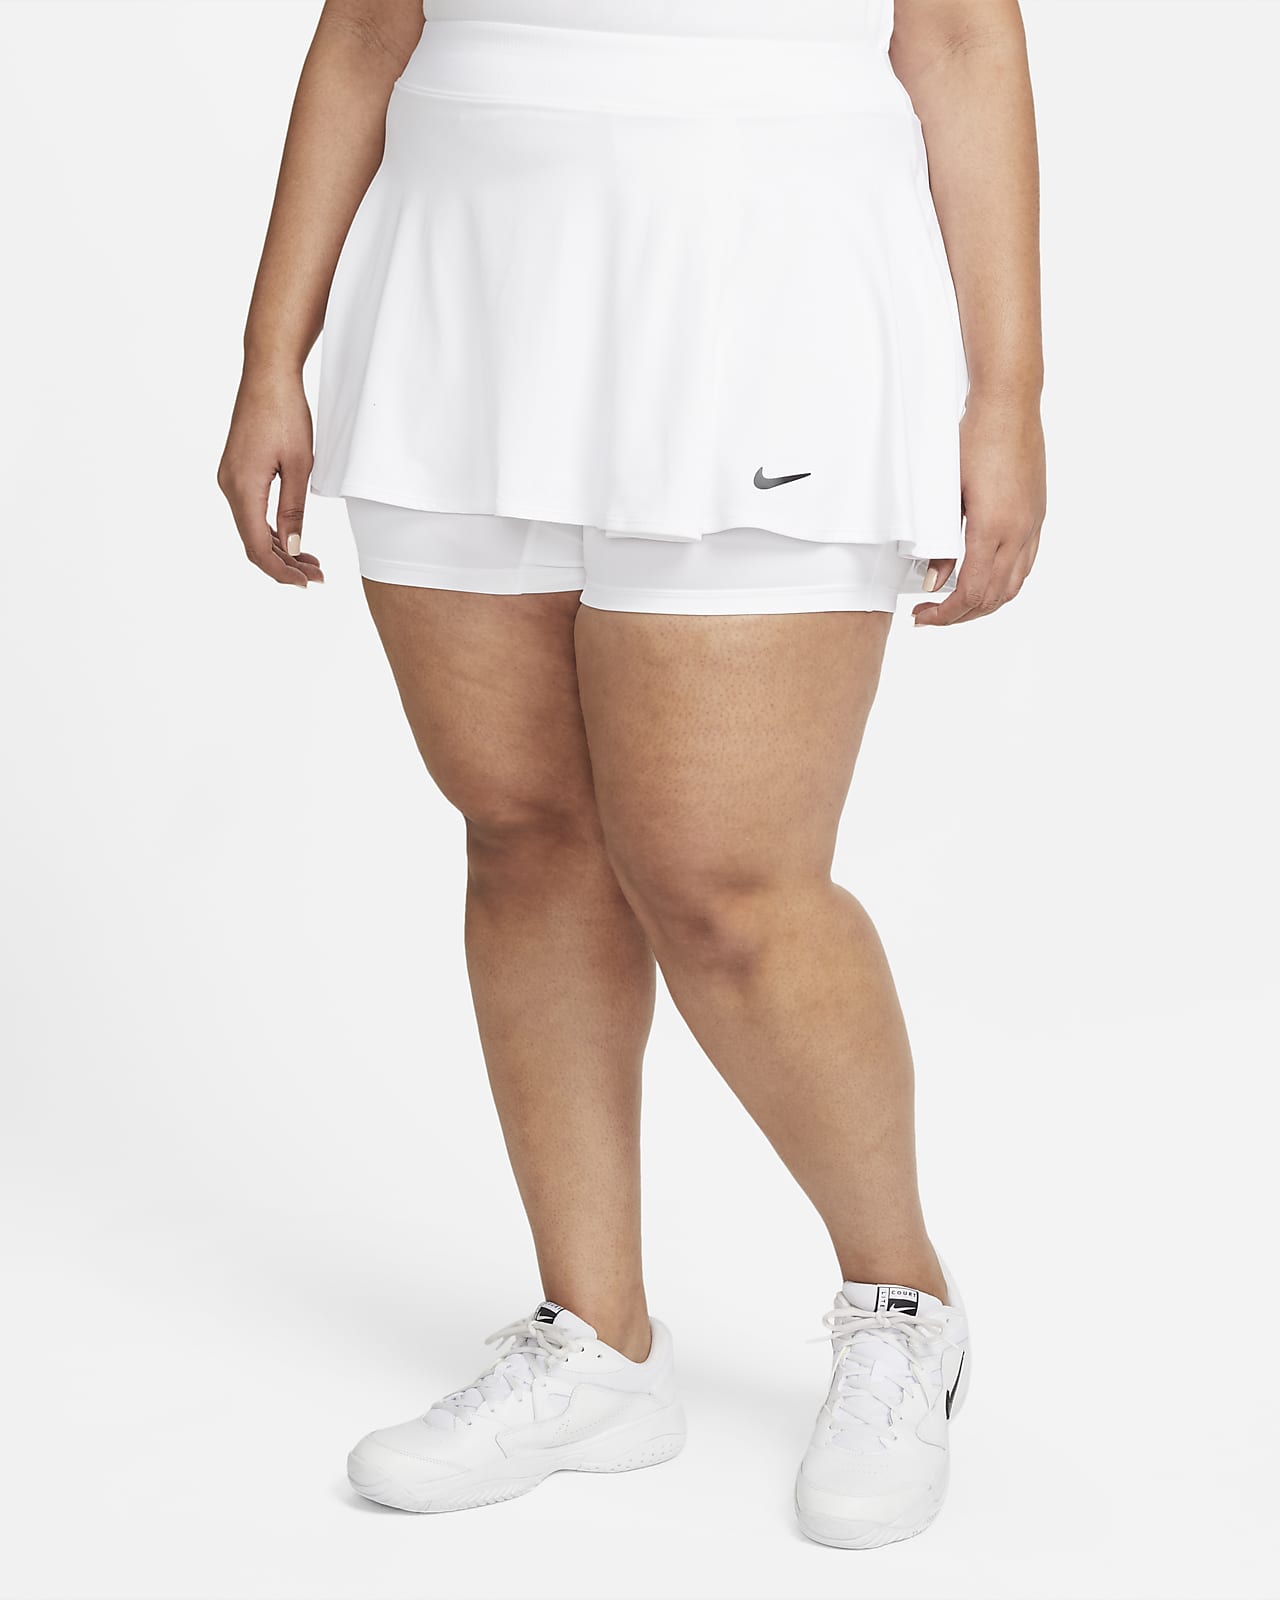 NikeCourt Dri-FIT Victory Women's Flouncy Tennis Skirt (Plus Size)